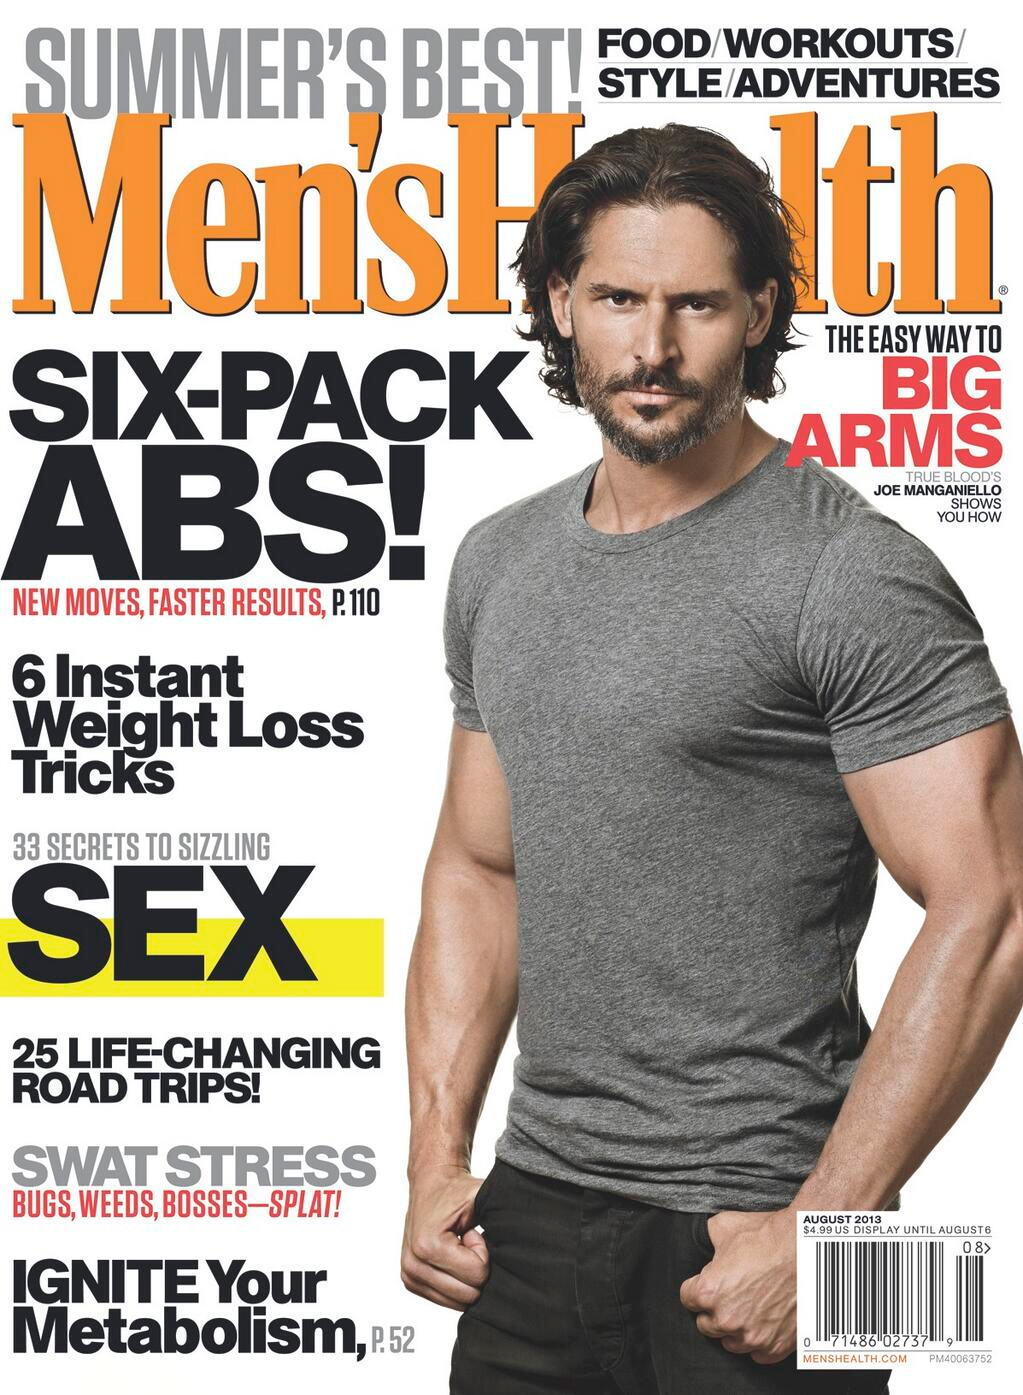 Joe Manganiello Stars in Shirtless Cover Shoot for Men's Health August 2013 Issue